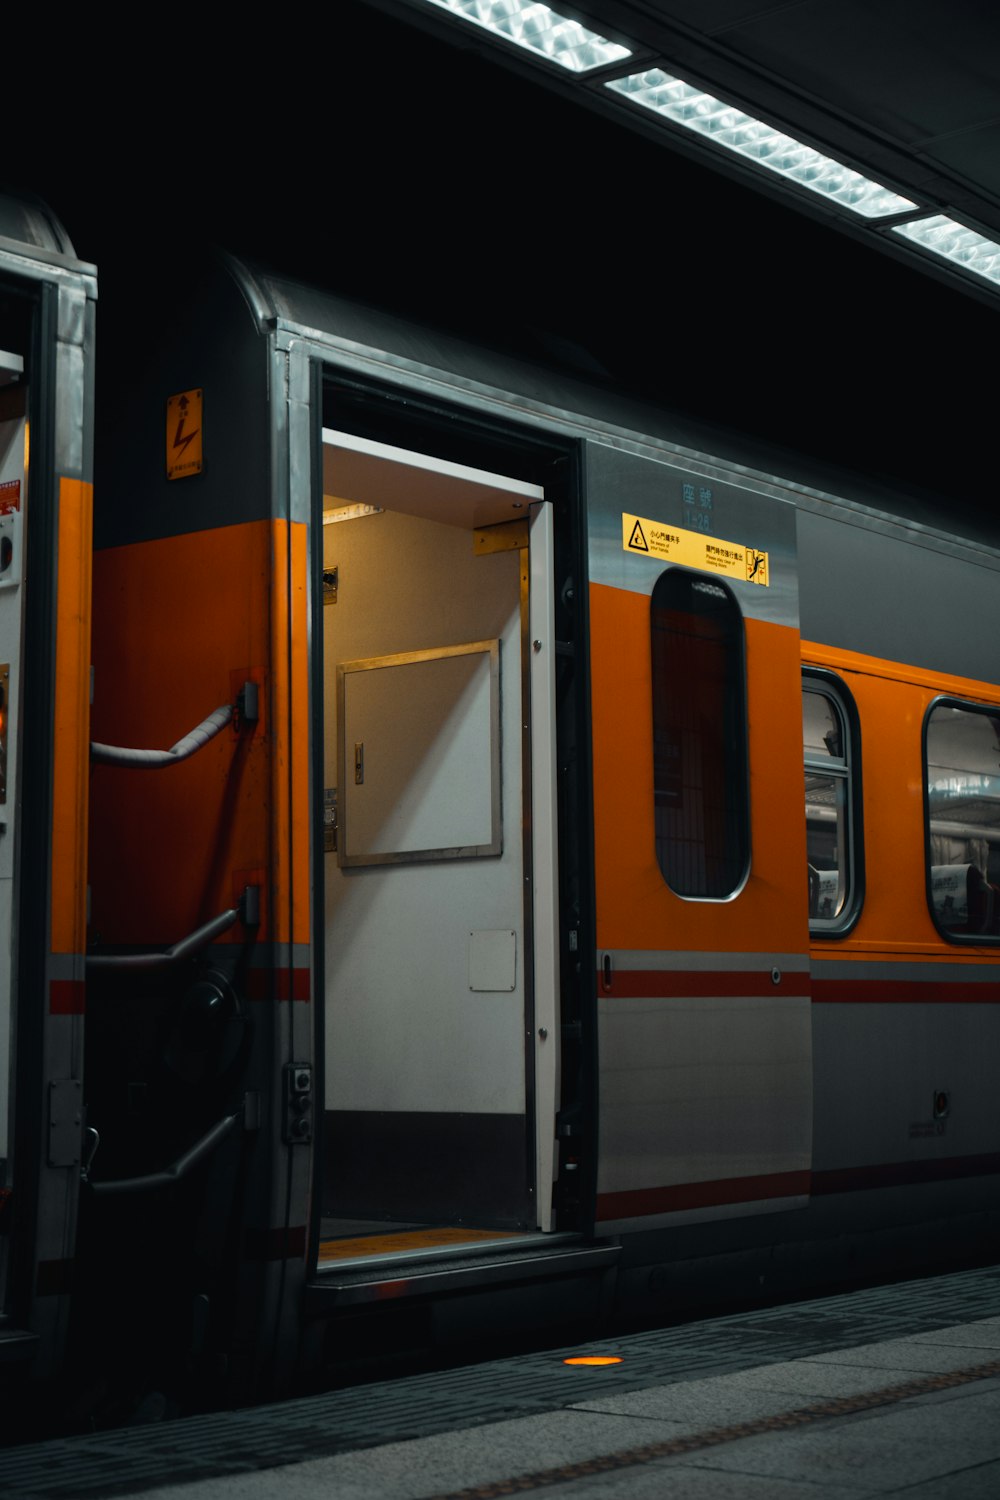 Tren naranja y negro en la estación de tren